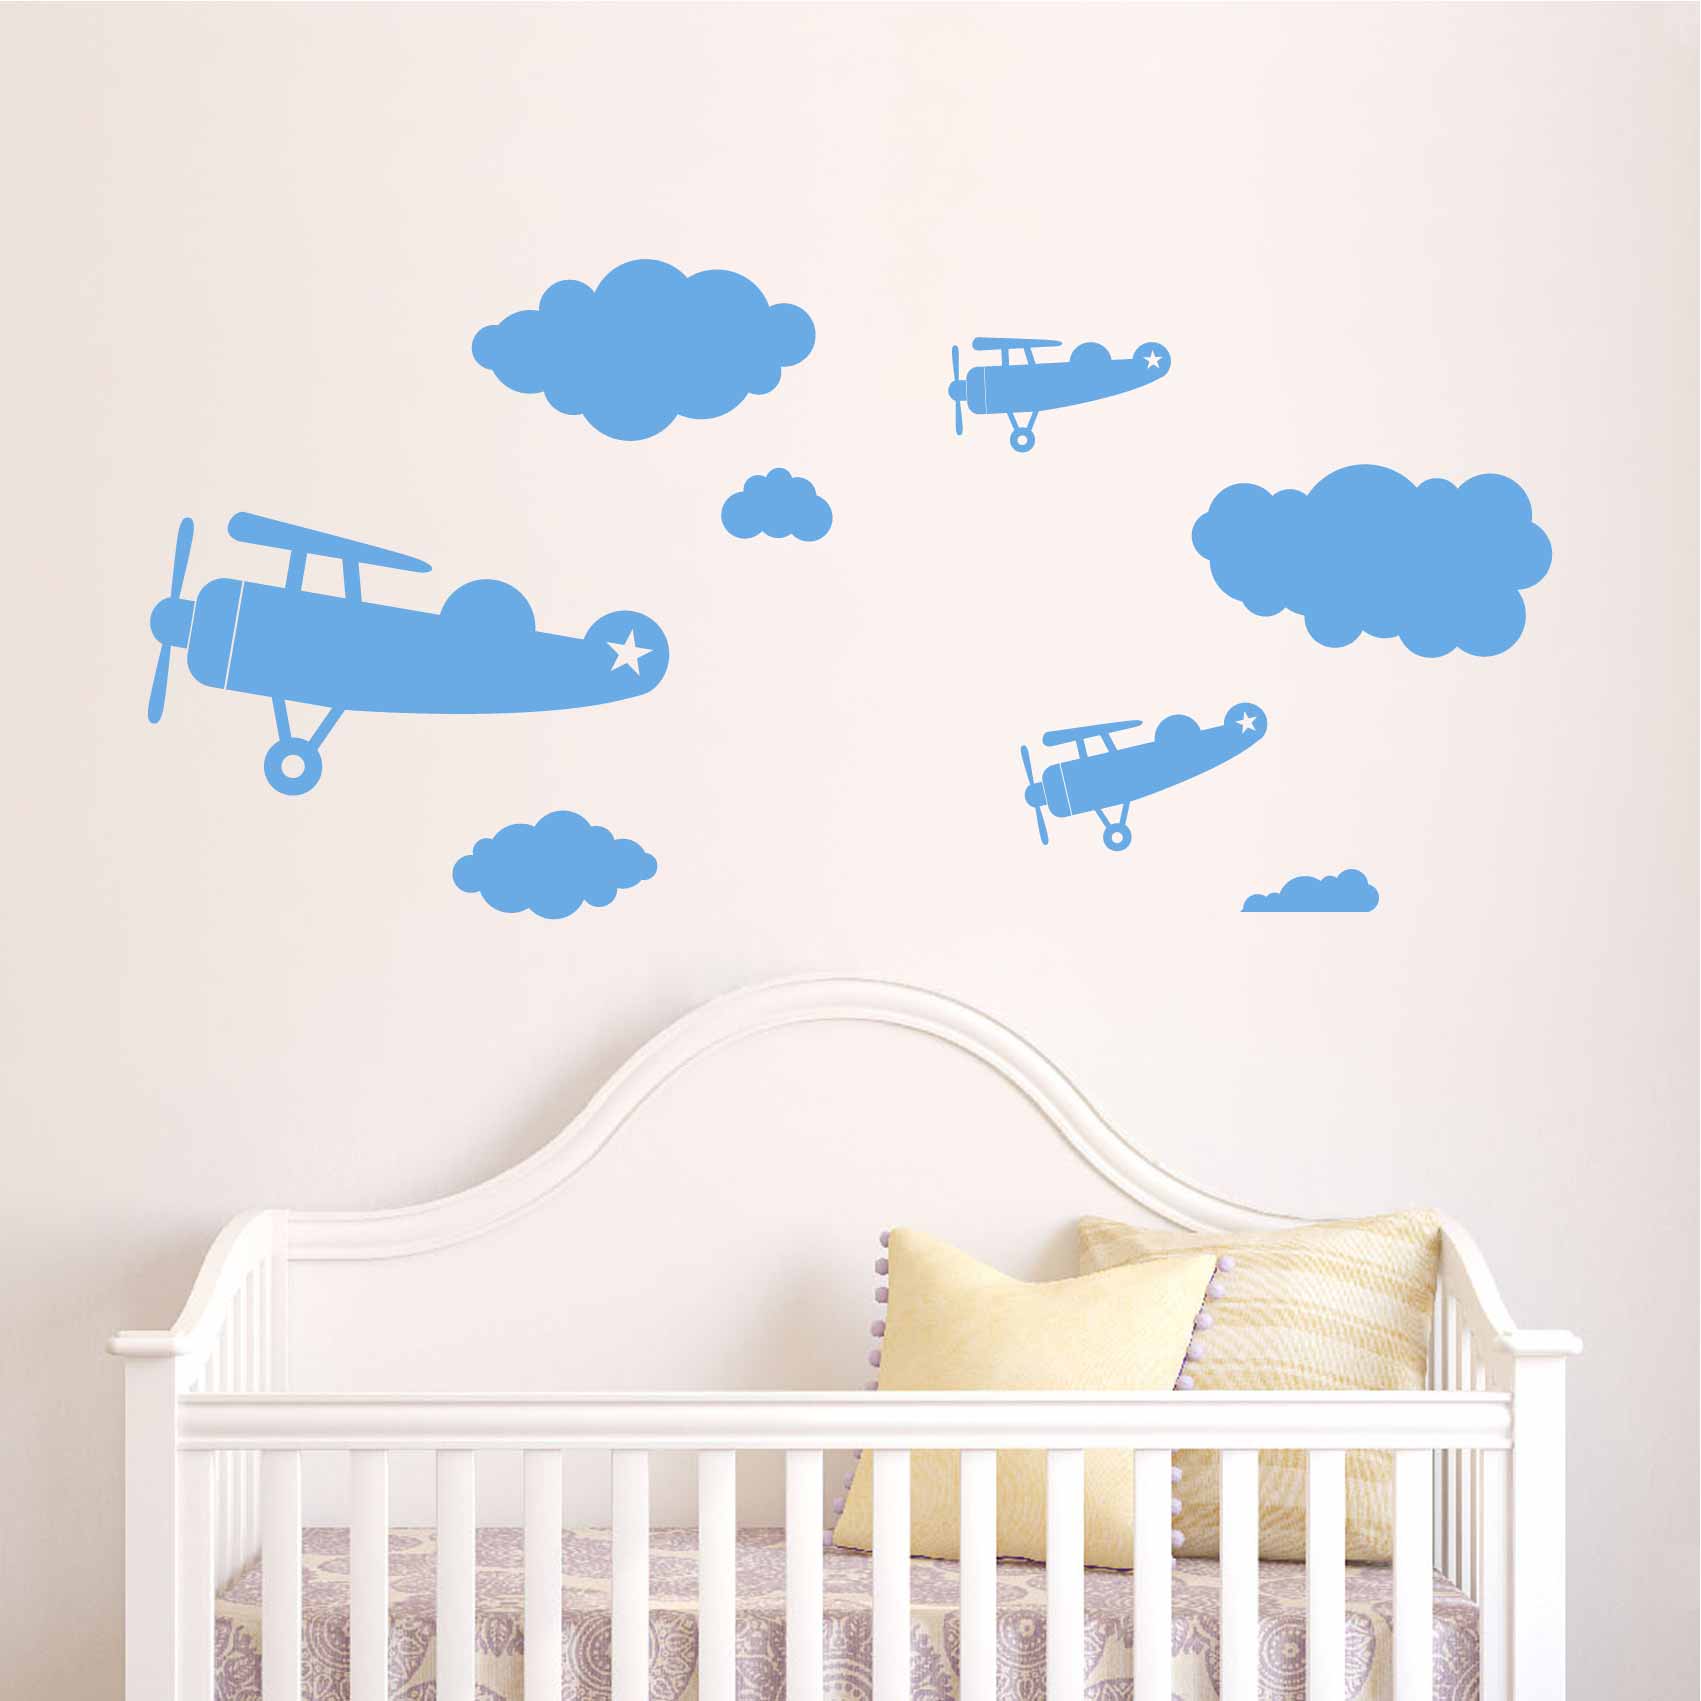 stickers-avions-chambre-enfant-ref9avion-stickers-muraux-avion-autocollant-deco-chambre-enfant-sticker-mural-avions